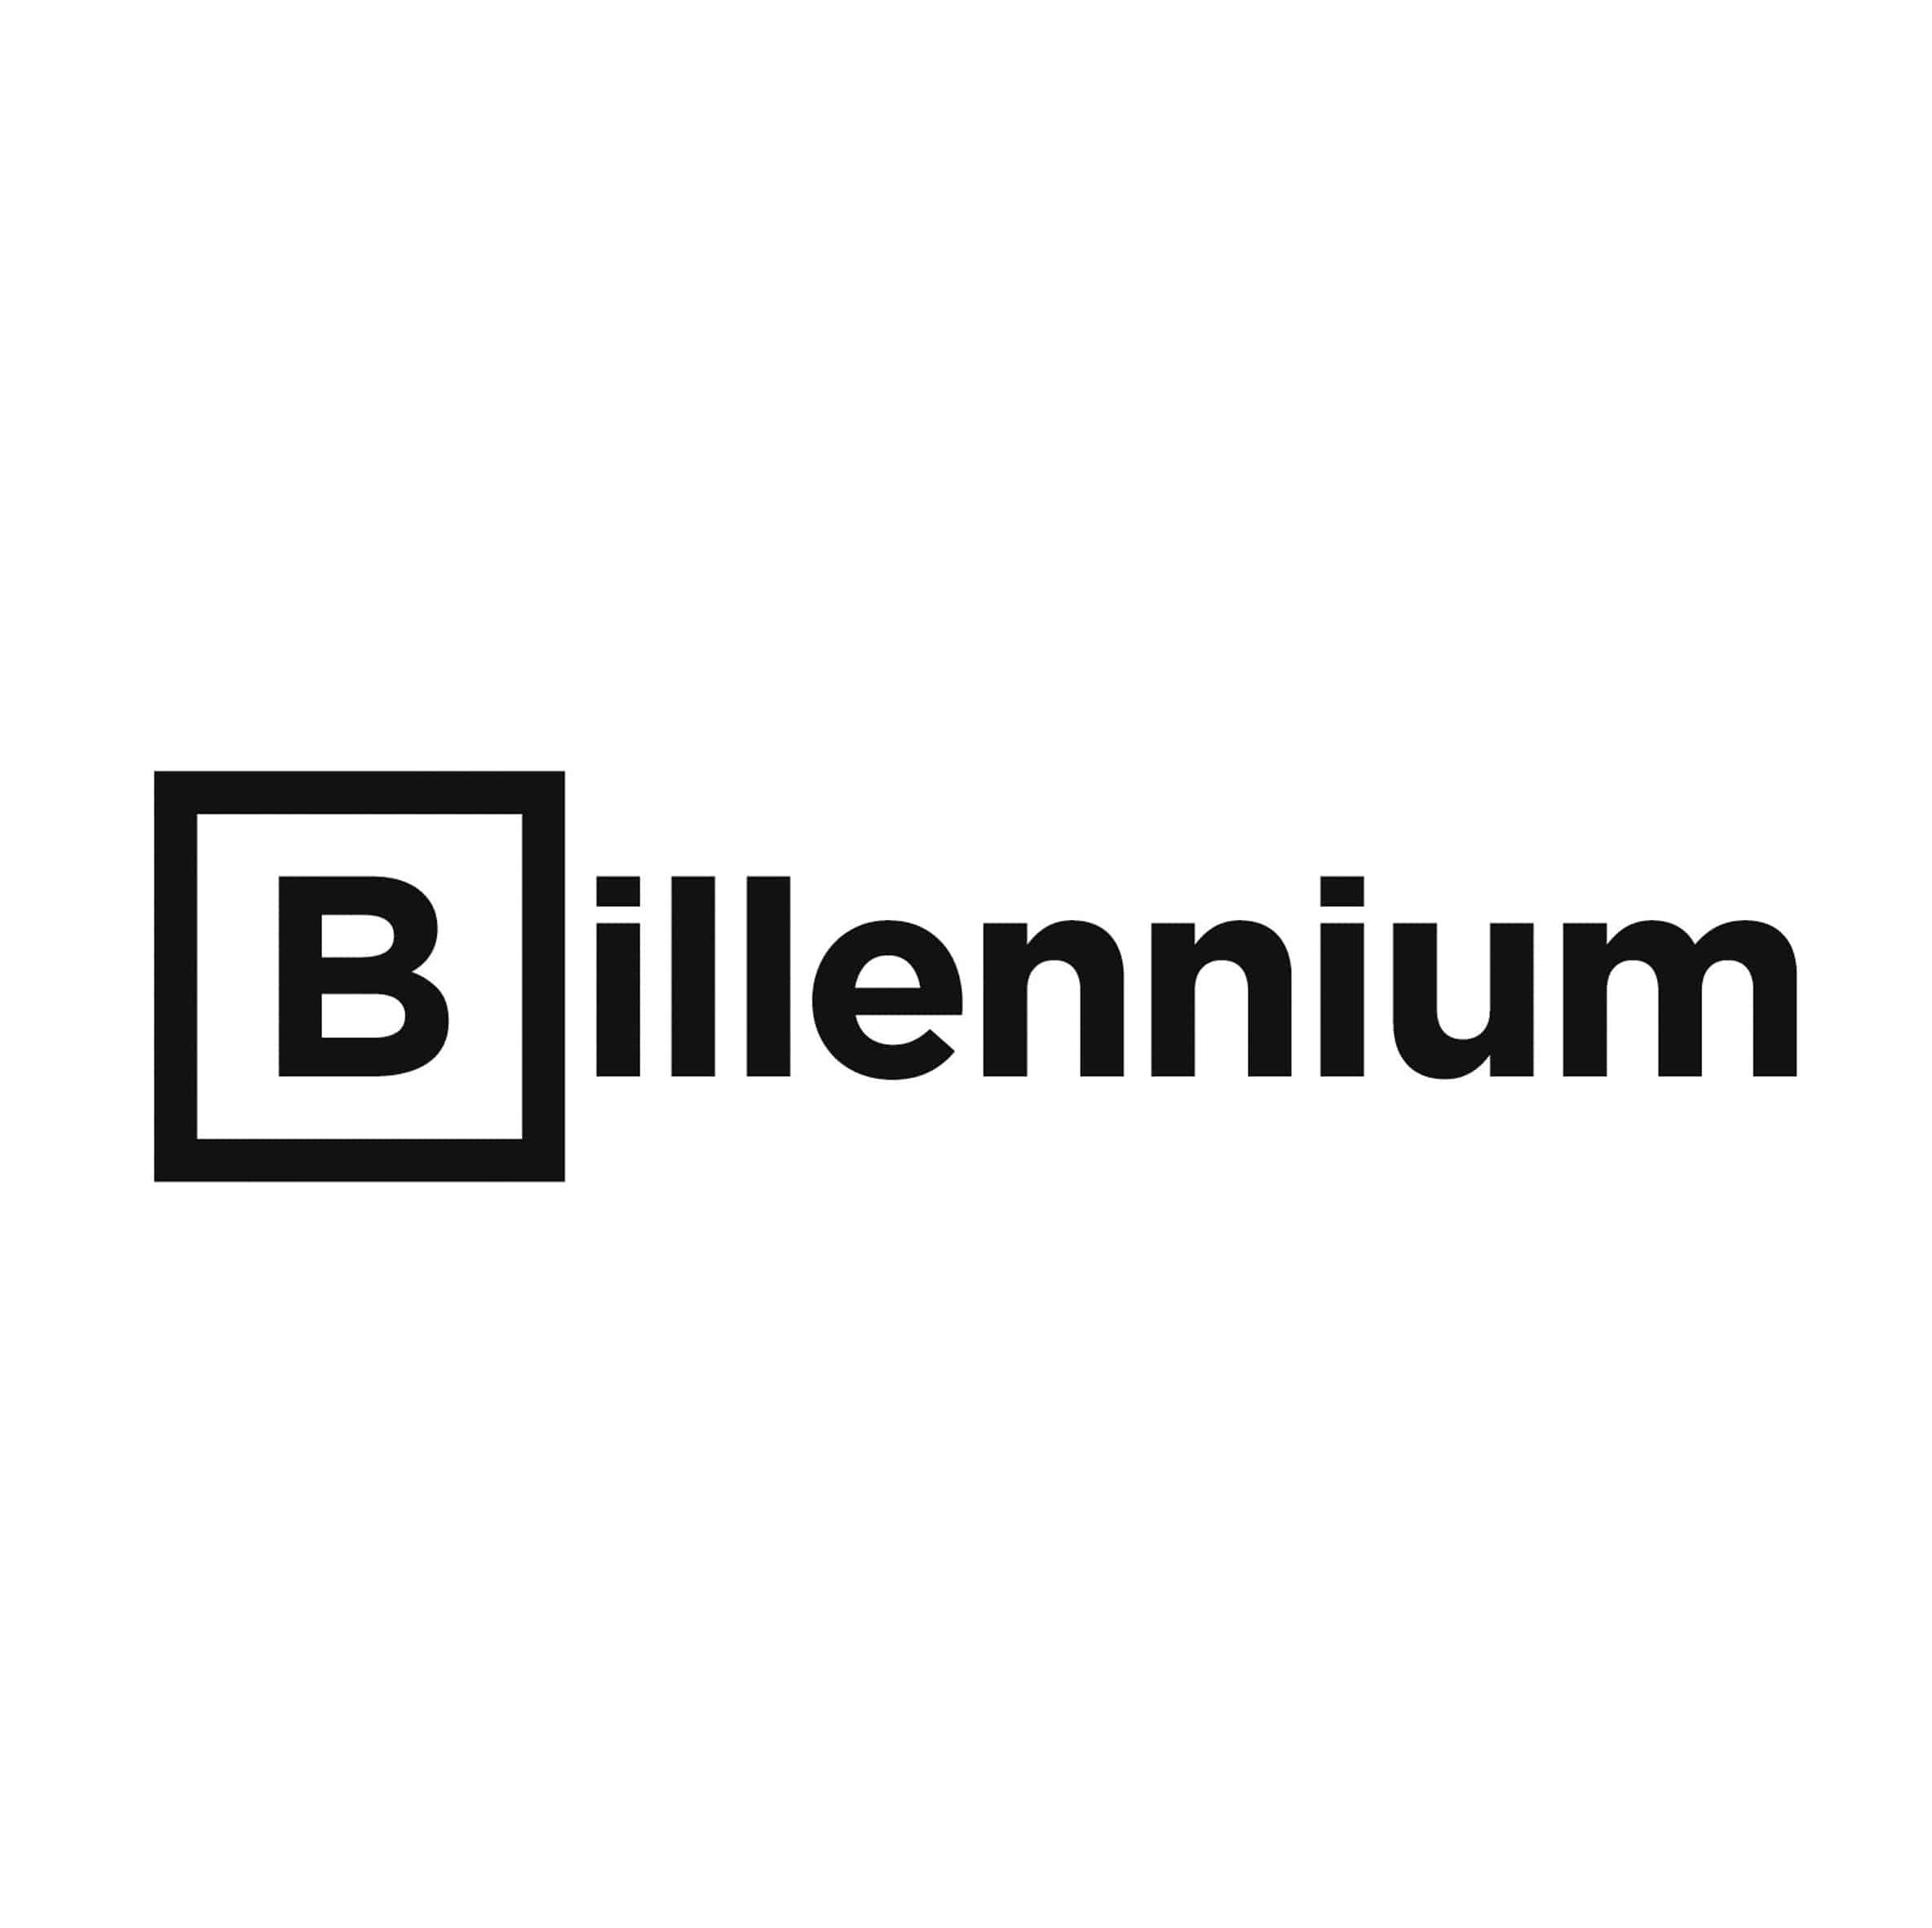 billennium